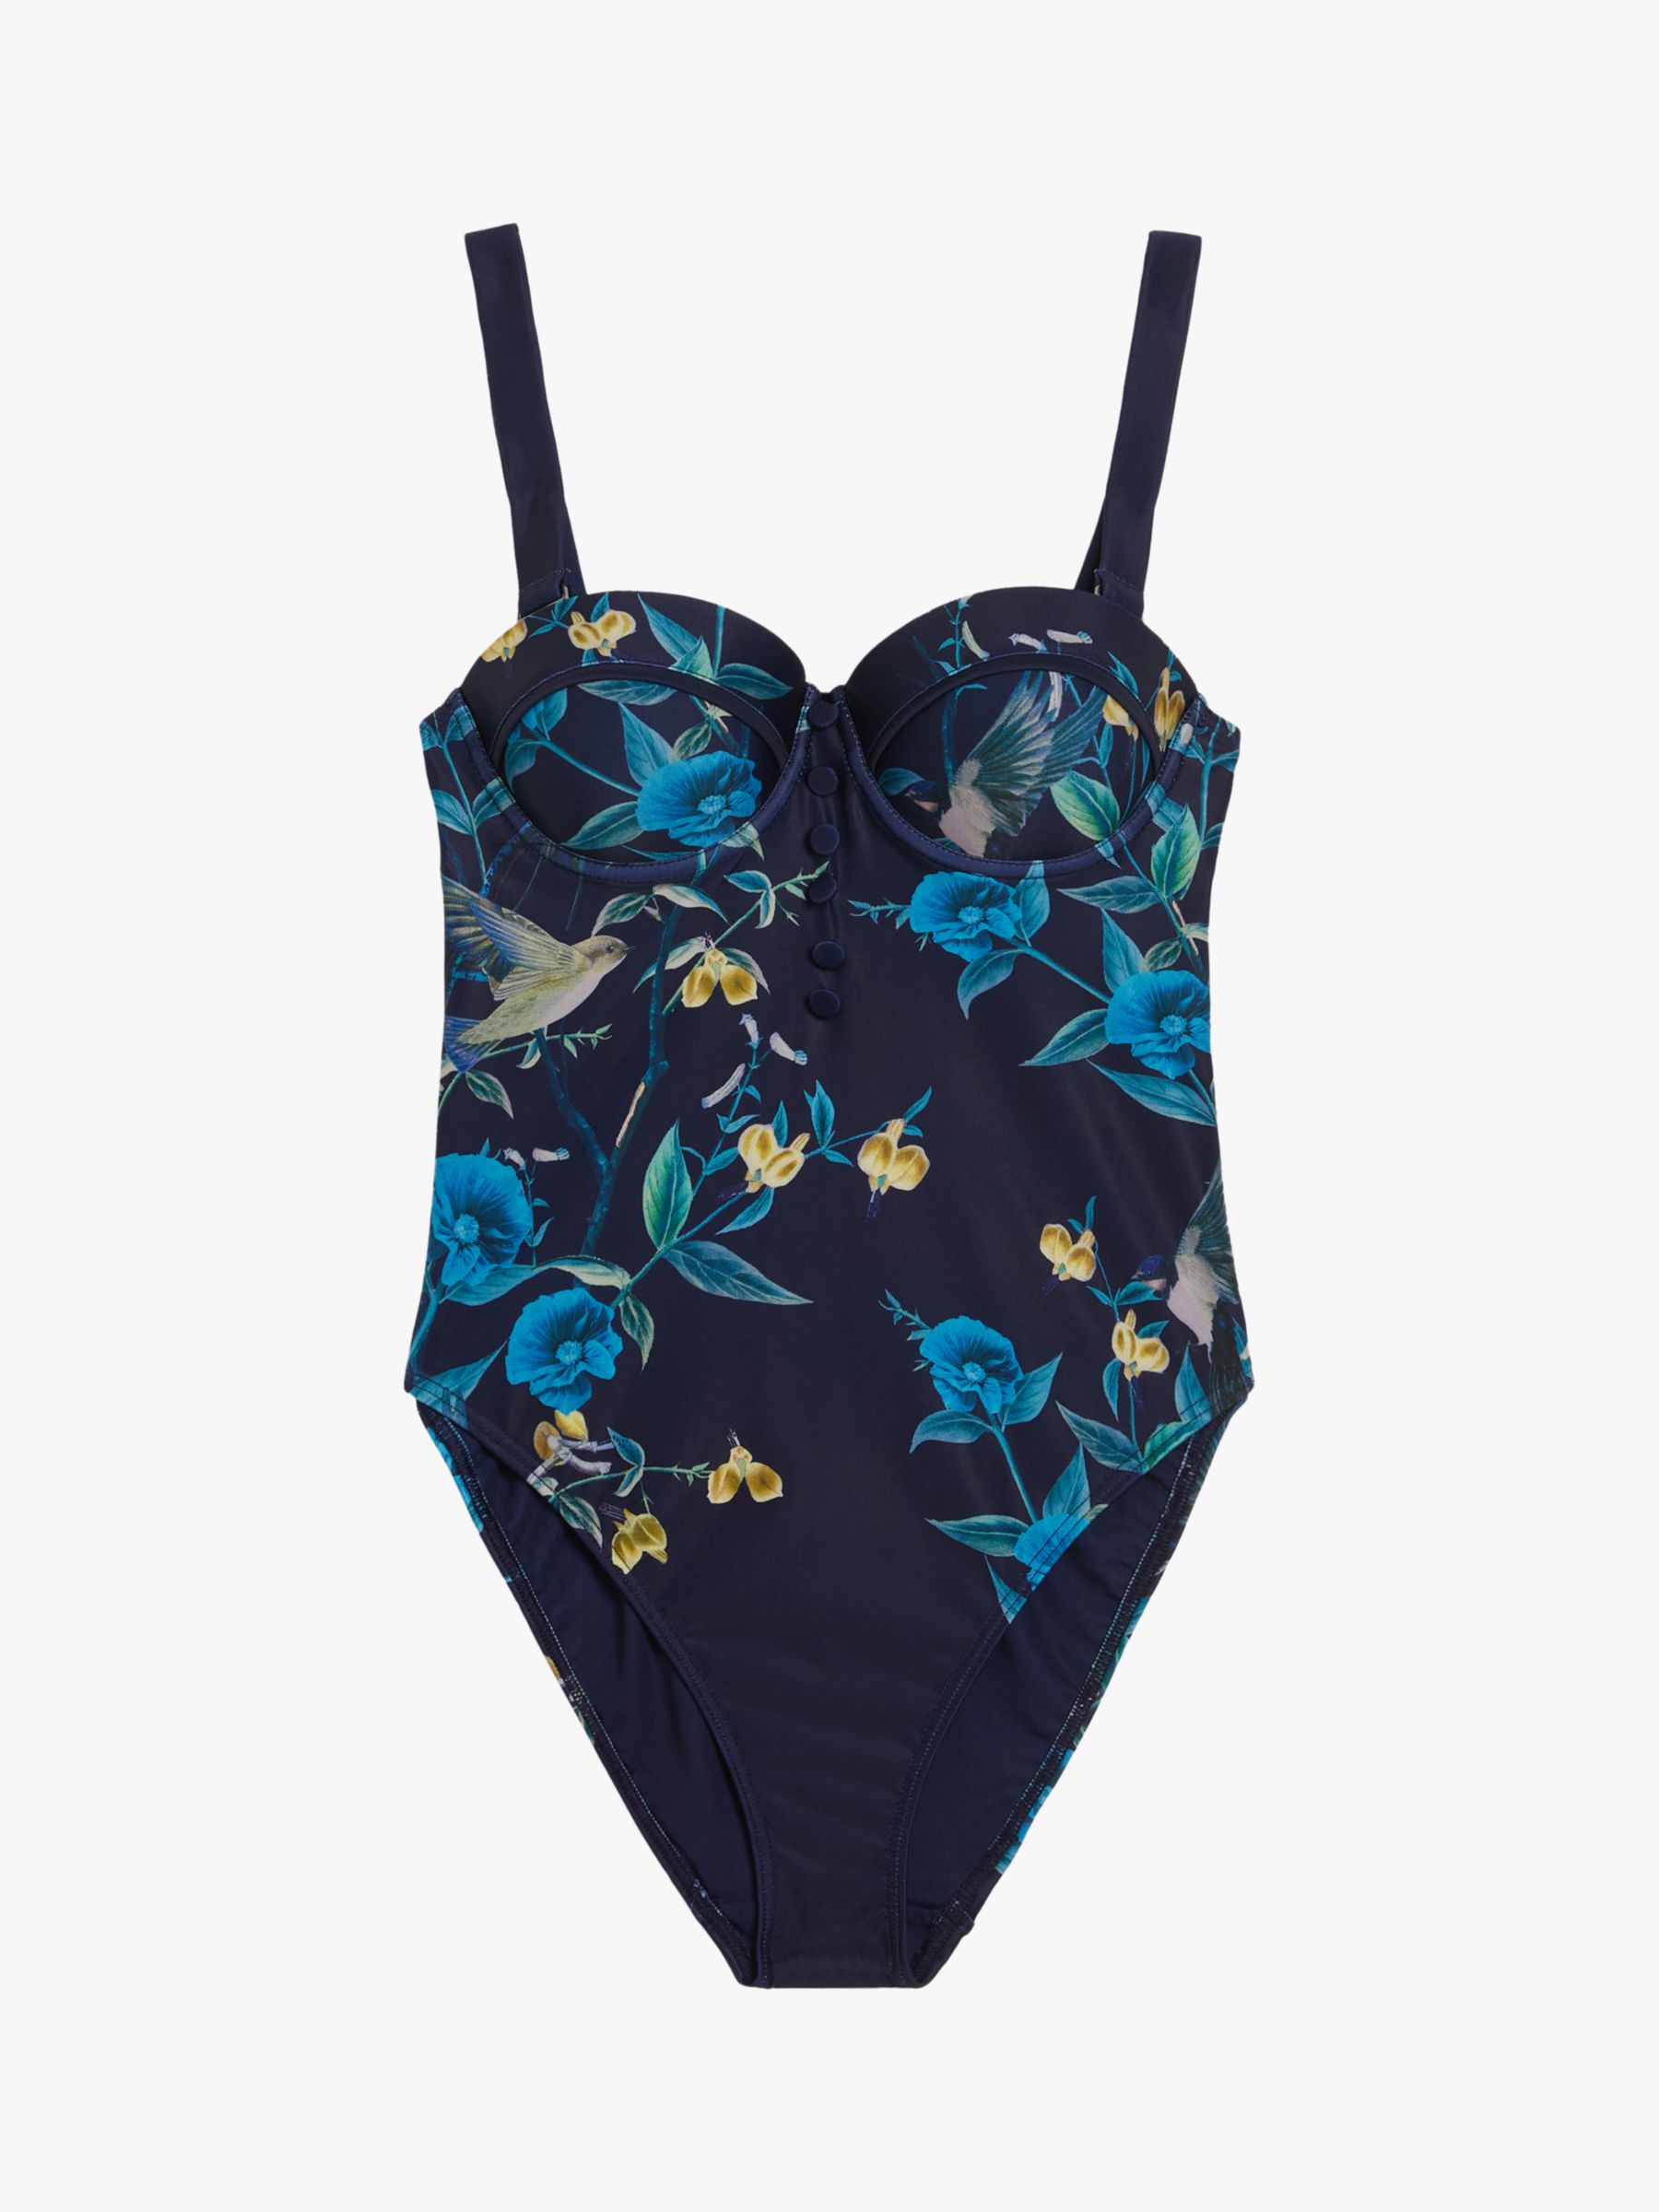 Ted Baker Rainnah Floral Print Button Detail Swimsuit, Navy/Multi, 14